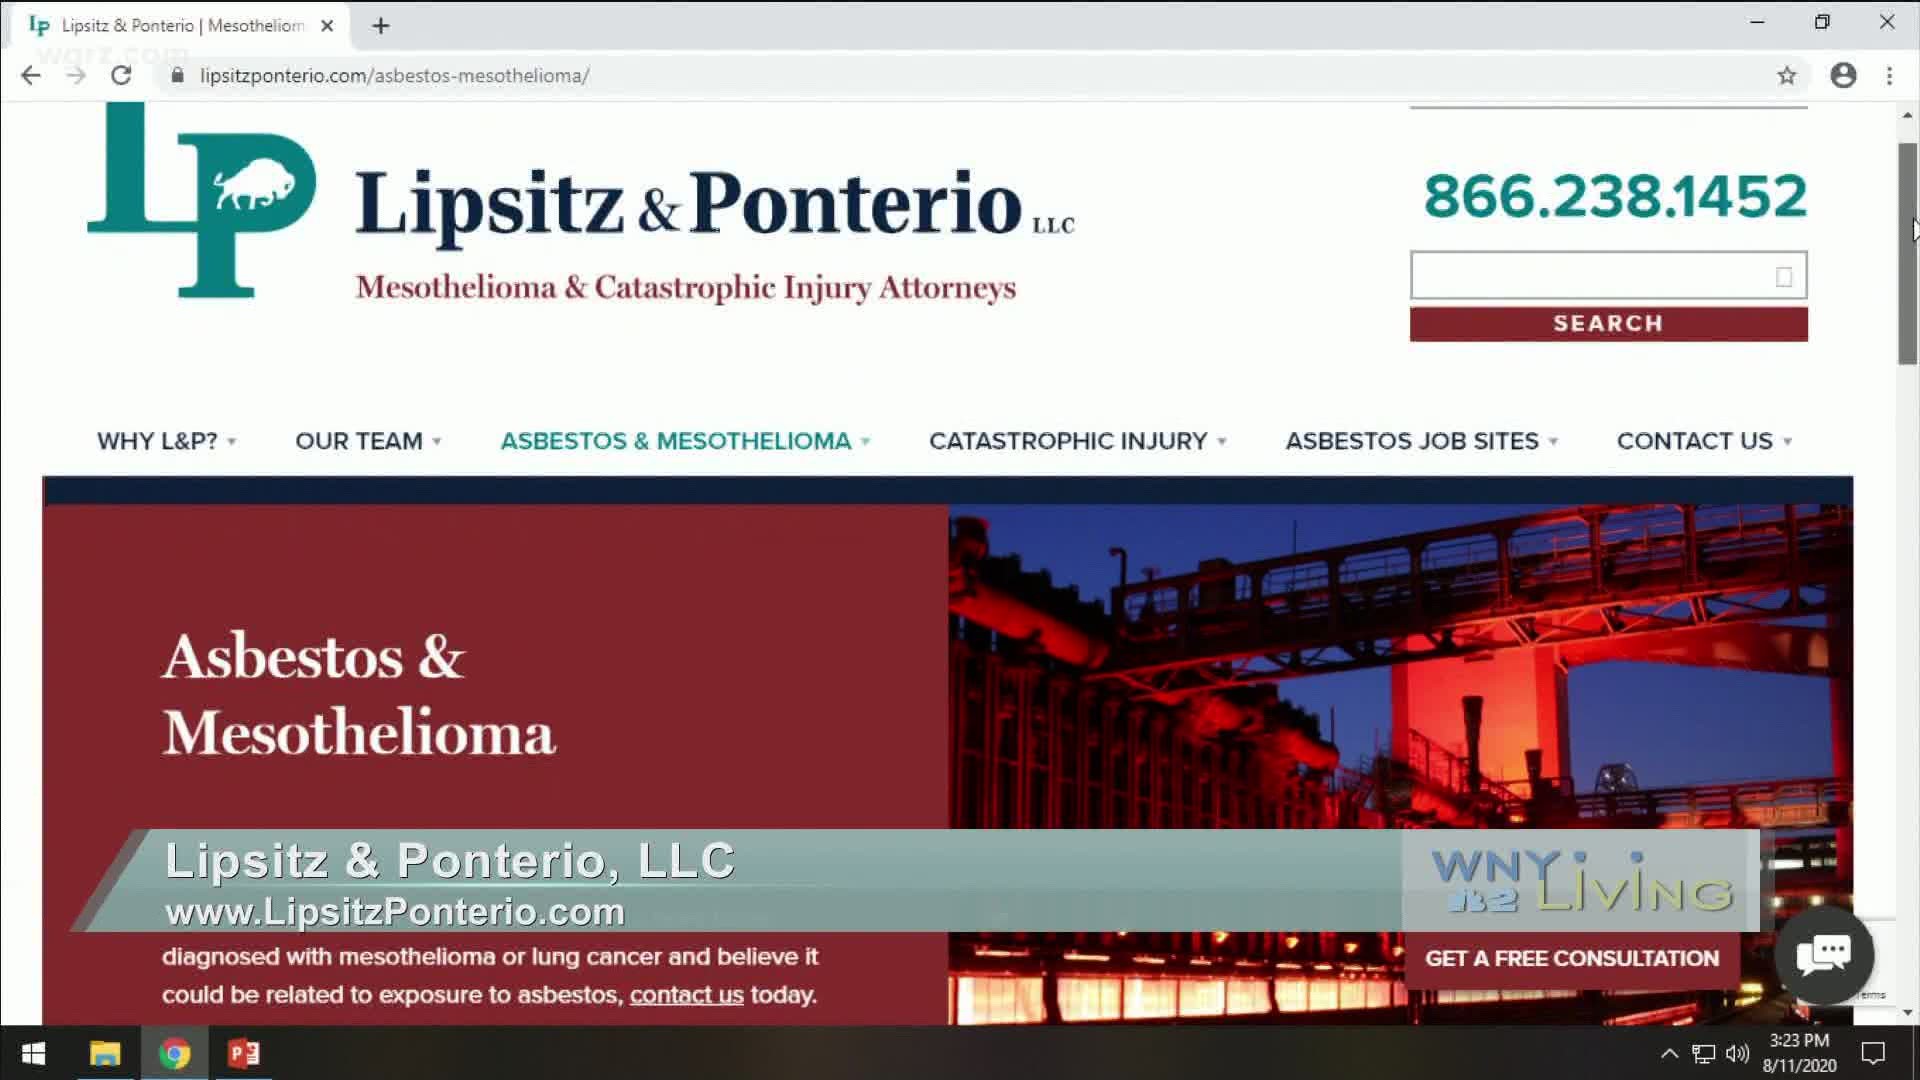 WNY Living - August 15 - Lipsitz & Ponterio, LLC (THIS VIDEO IS SPONSORED BY LIPSITZ AND PONTERIO, LLC)